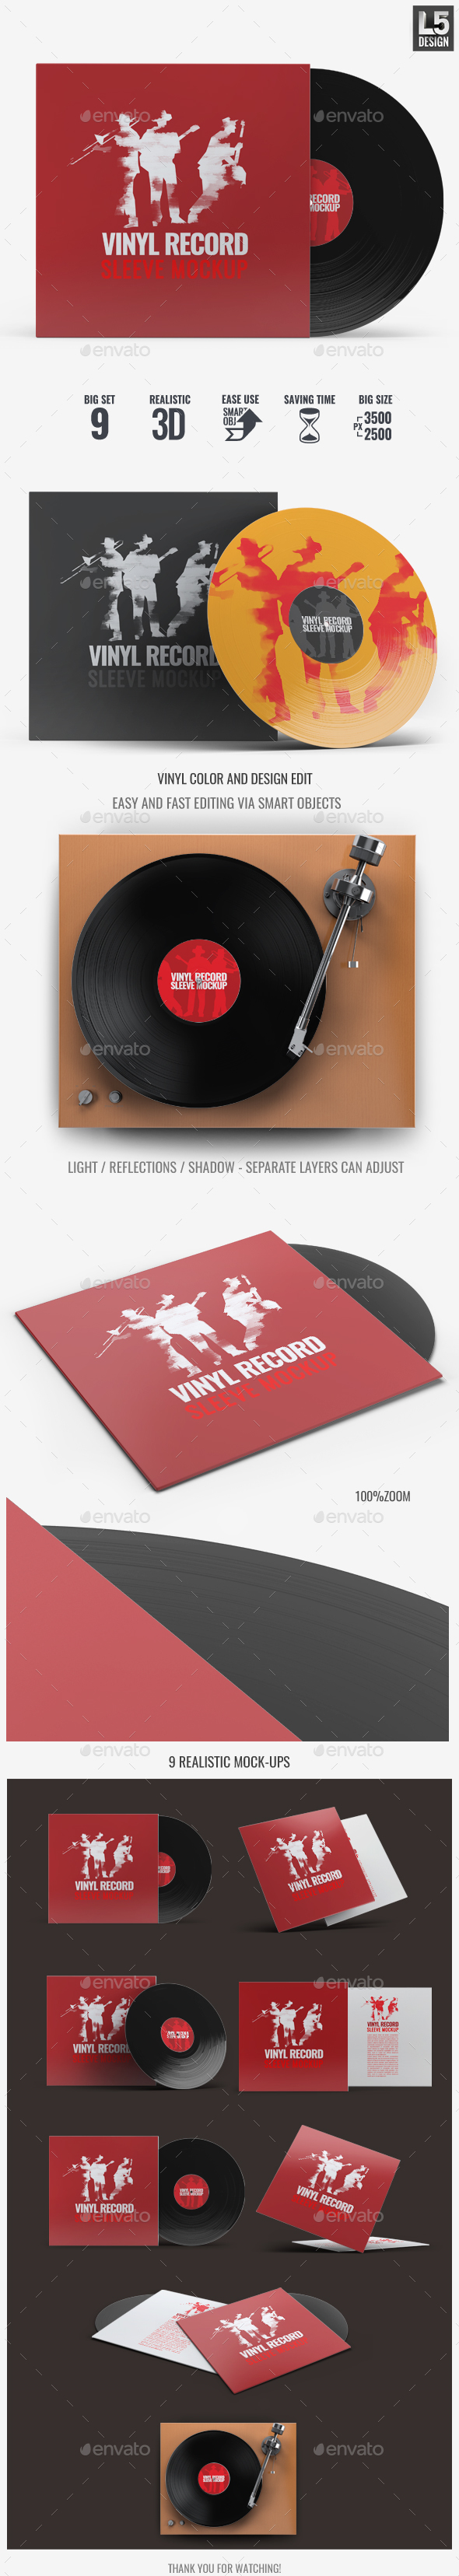 Vinyl Record Mock-Up L5Design | GraphicRiver